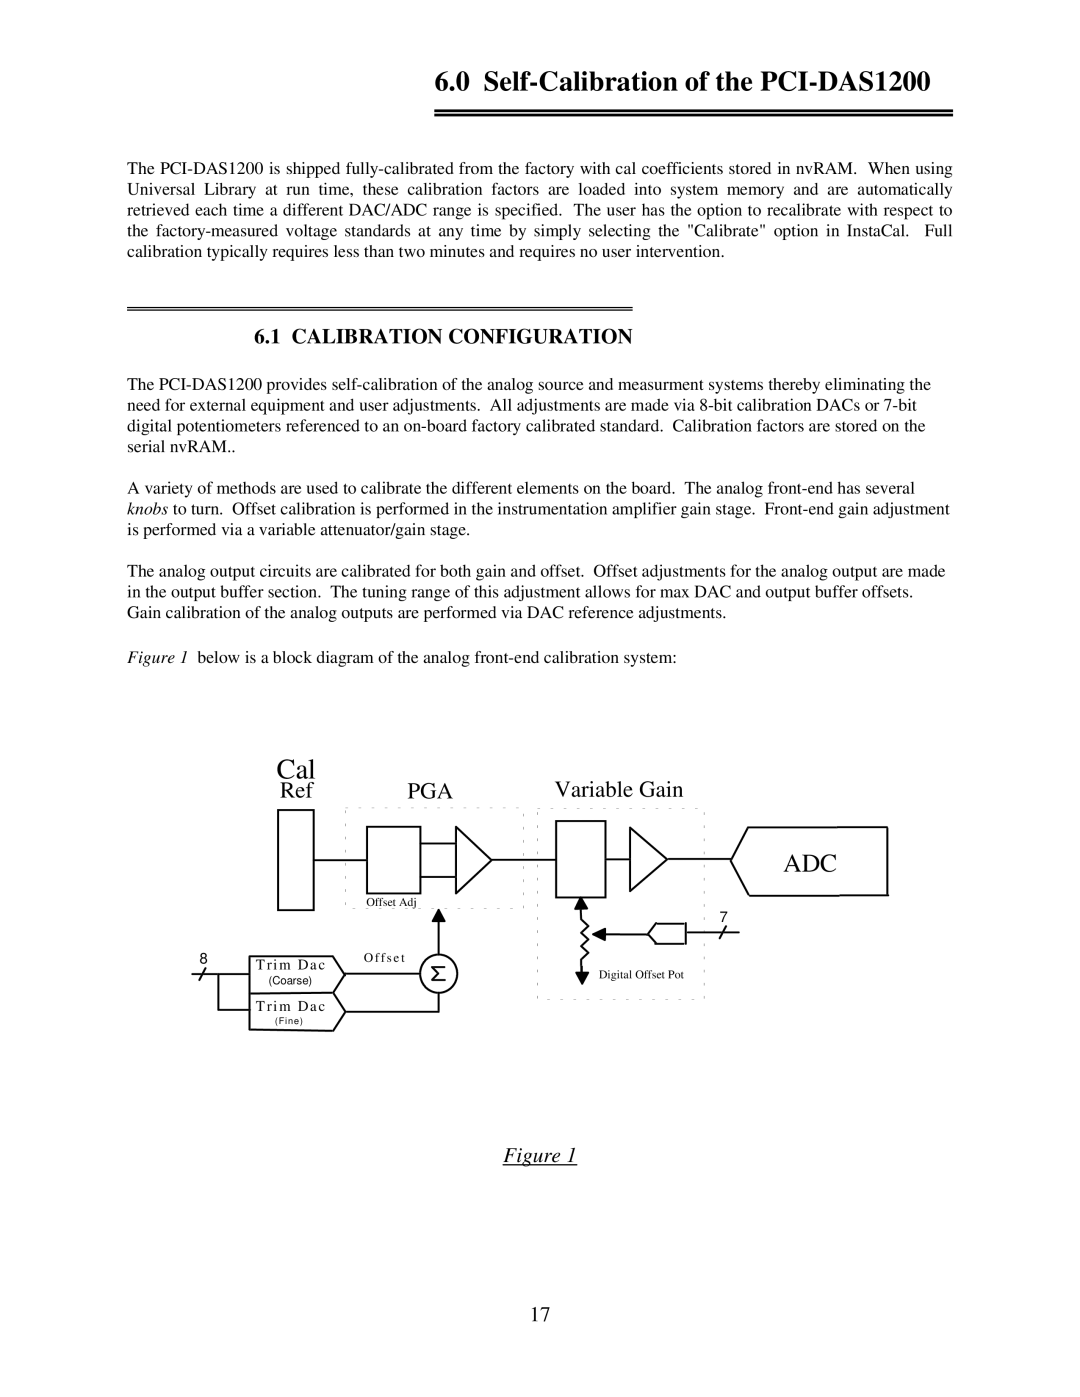 Omega Engineering manual Self-Calibration of the PCI-DAS1200, RefPGA, Variable Gain, Calibration Configuration 